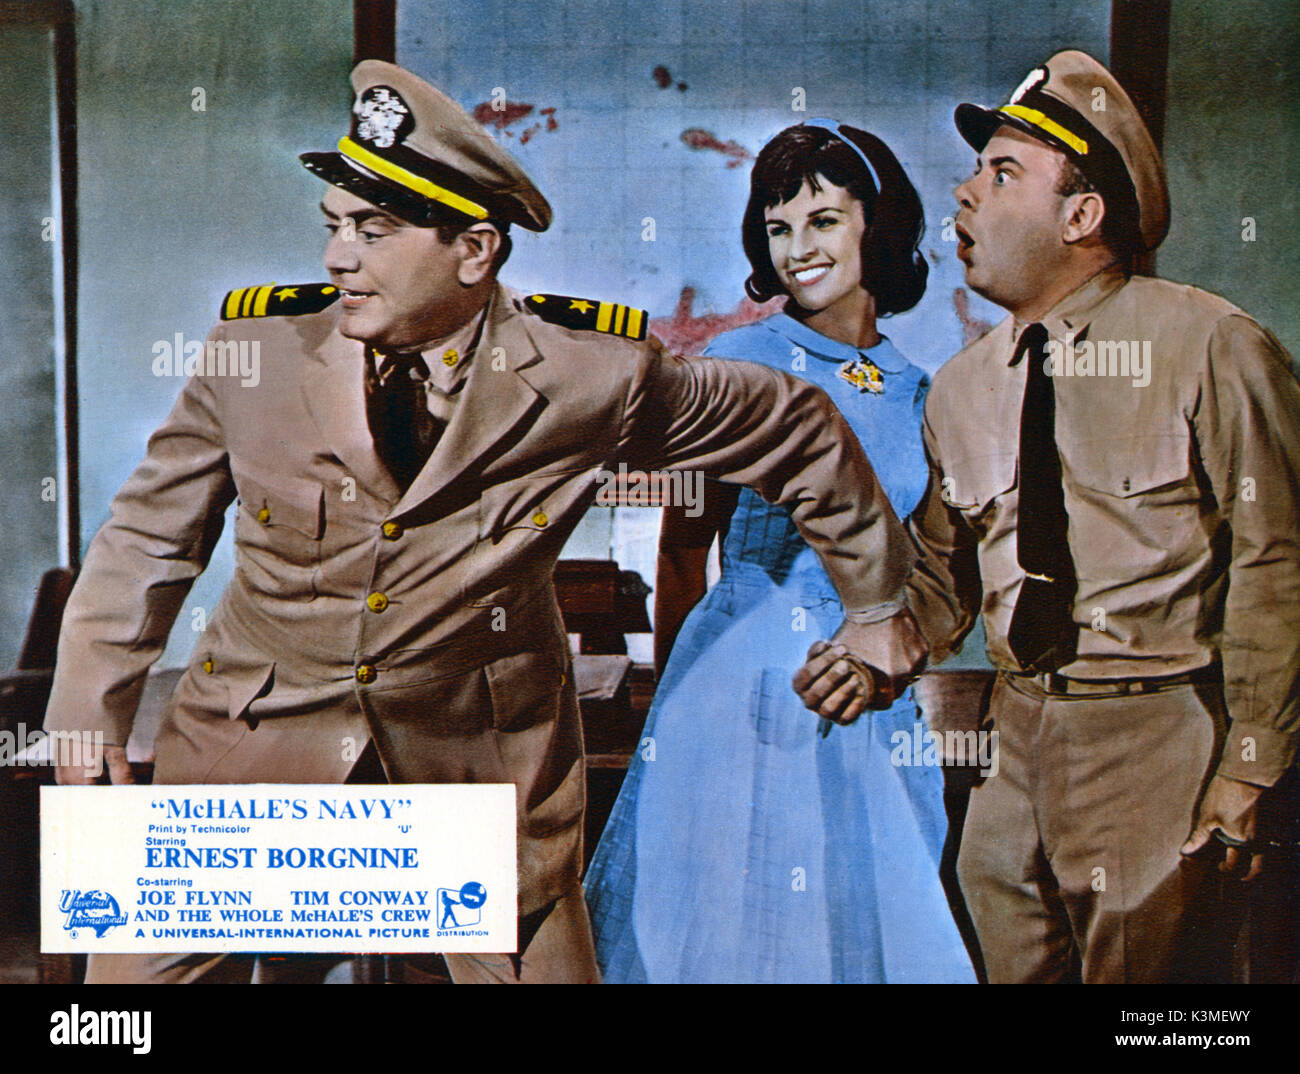 MCHALE'S Navy US [1964] Ernest Borgnine, CLAUDINE LONGET, TIM CONWAY data: 1964 Foto Stock